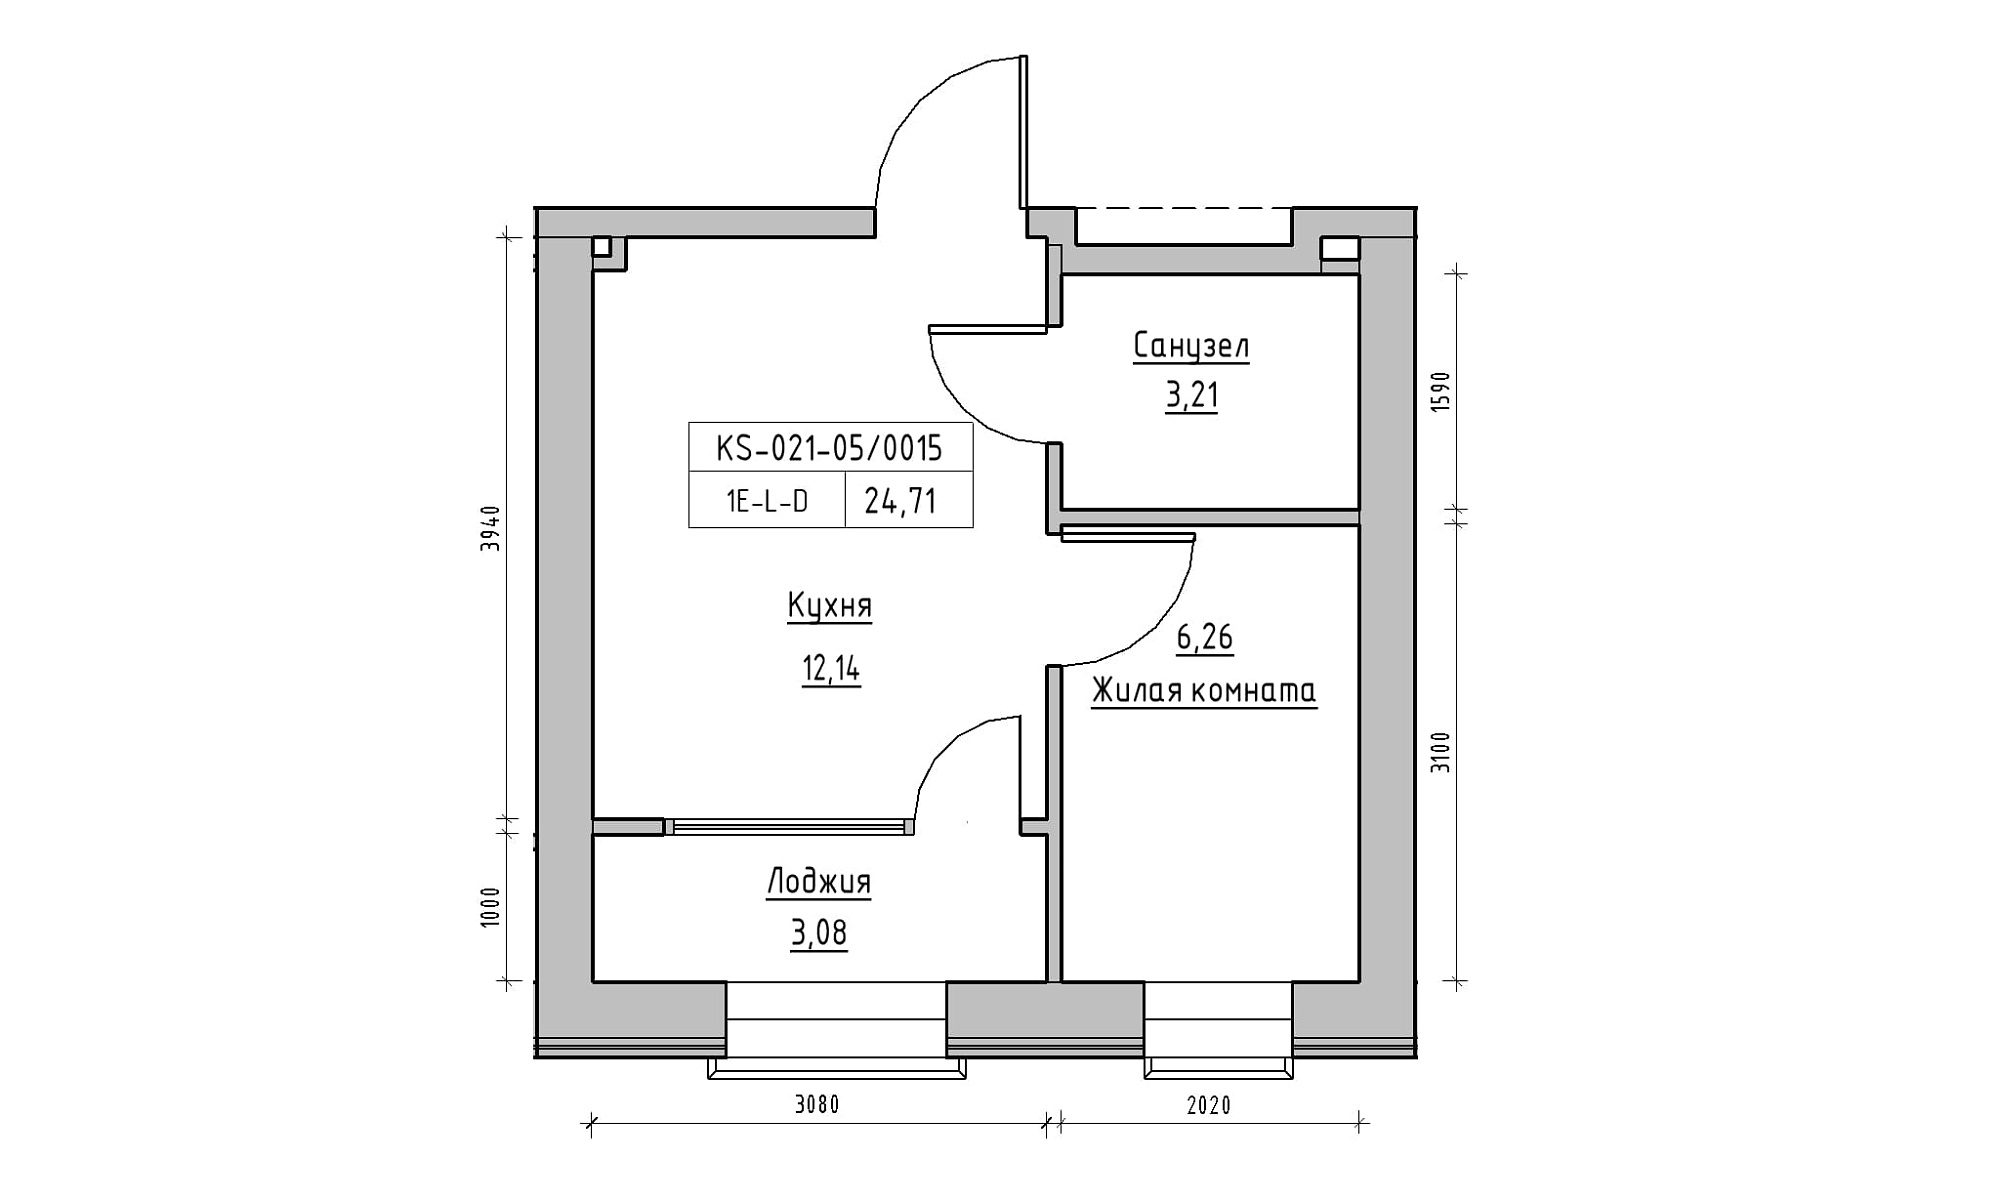 Planning 1-rm flats area 24.71m2, KS-021-05/0015.